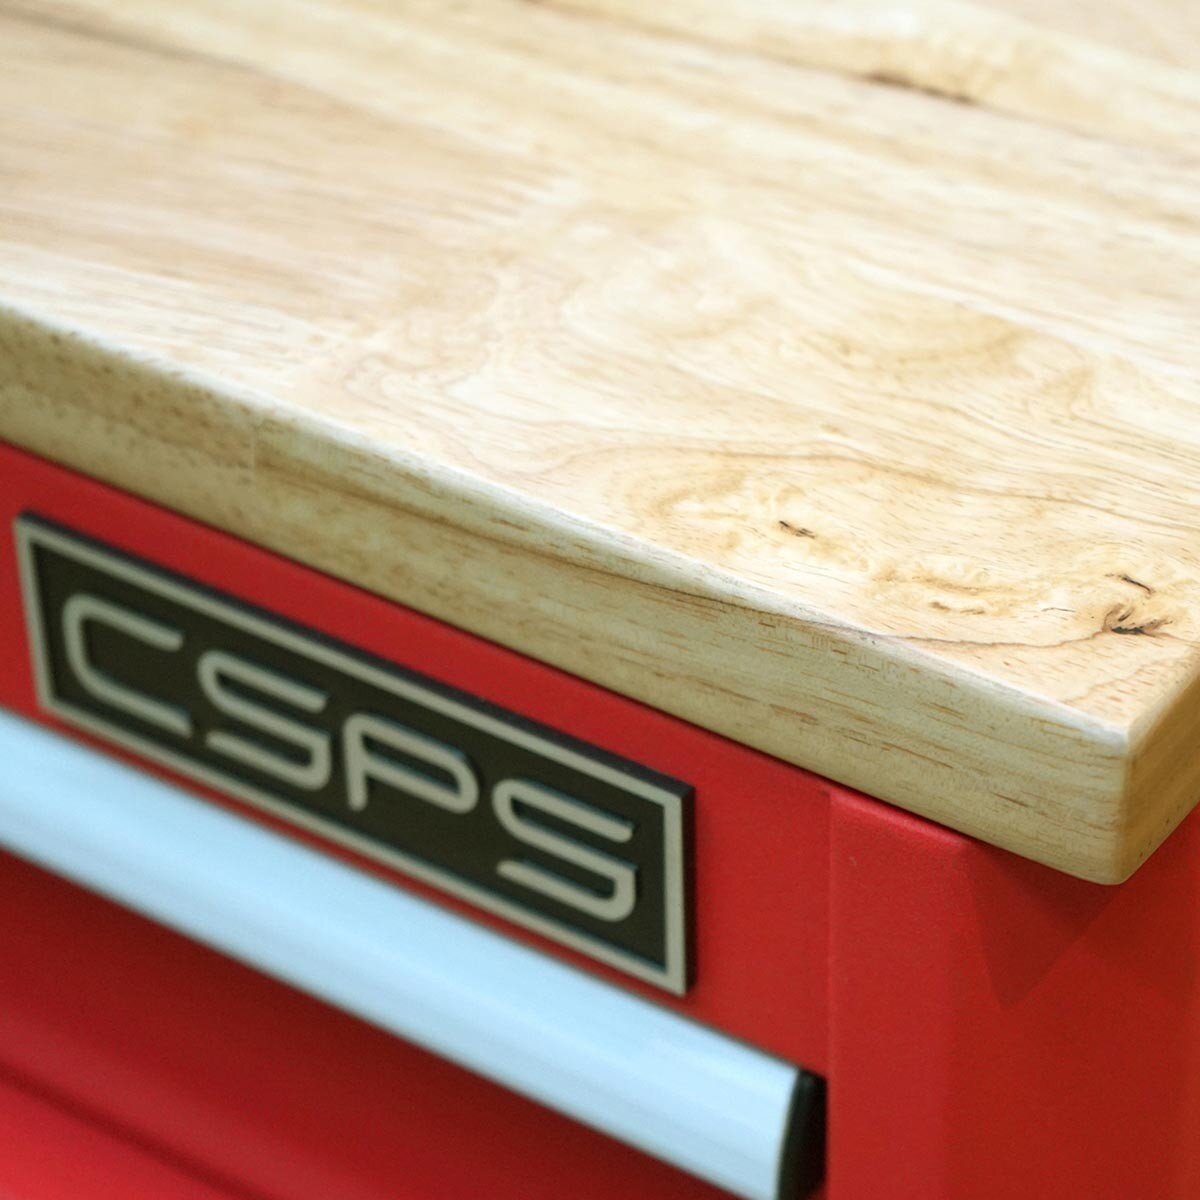 CSPS 8件組系統櫃組 1.0公釐 紅砂 限配送至花蓮、台東